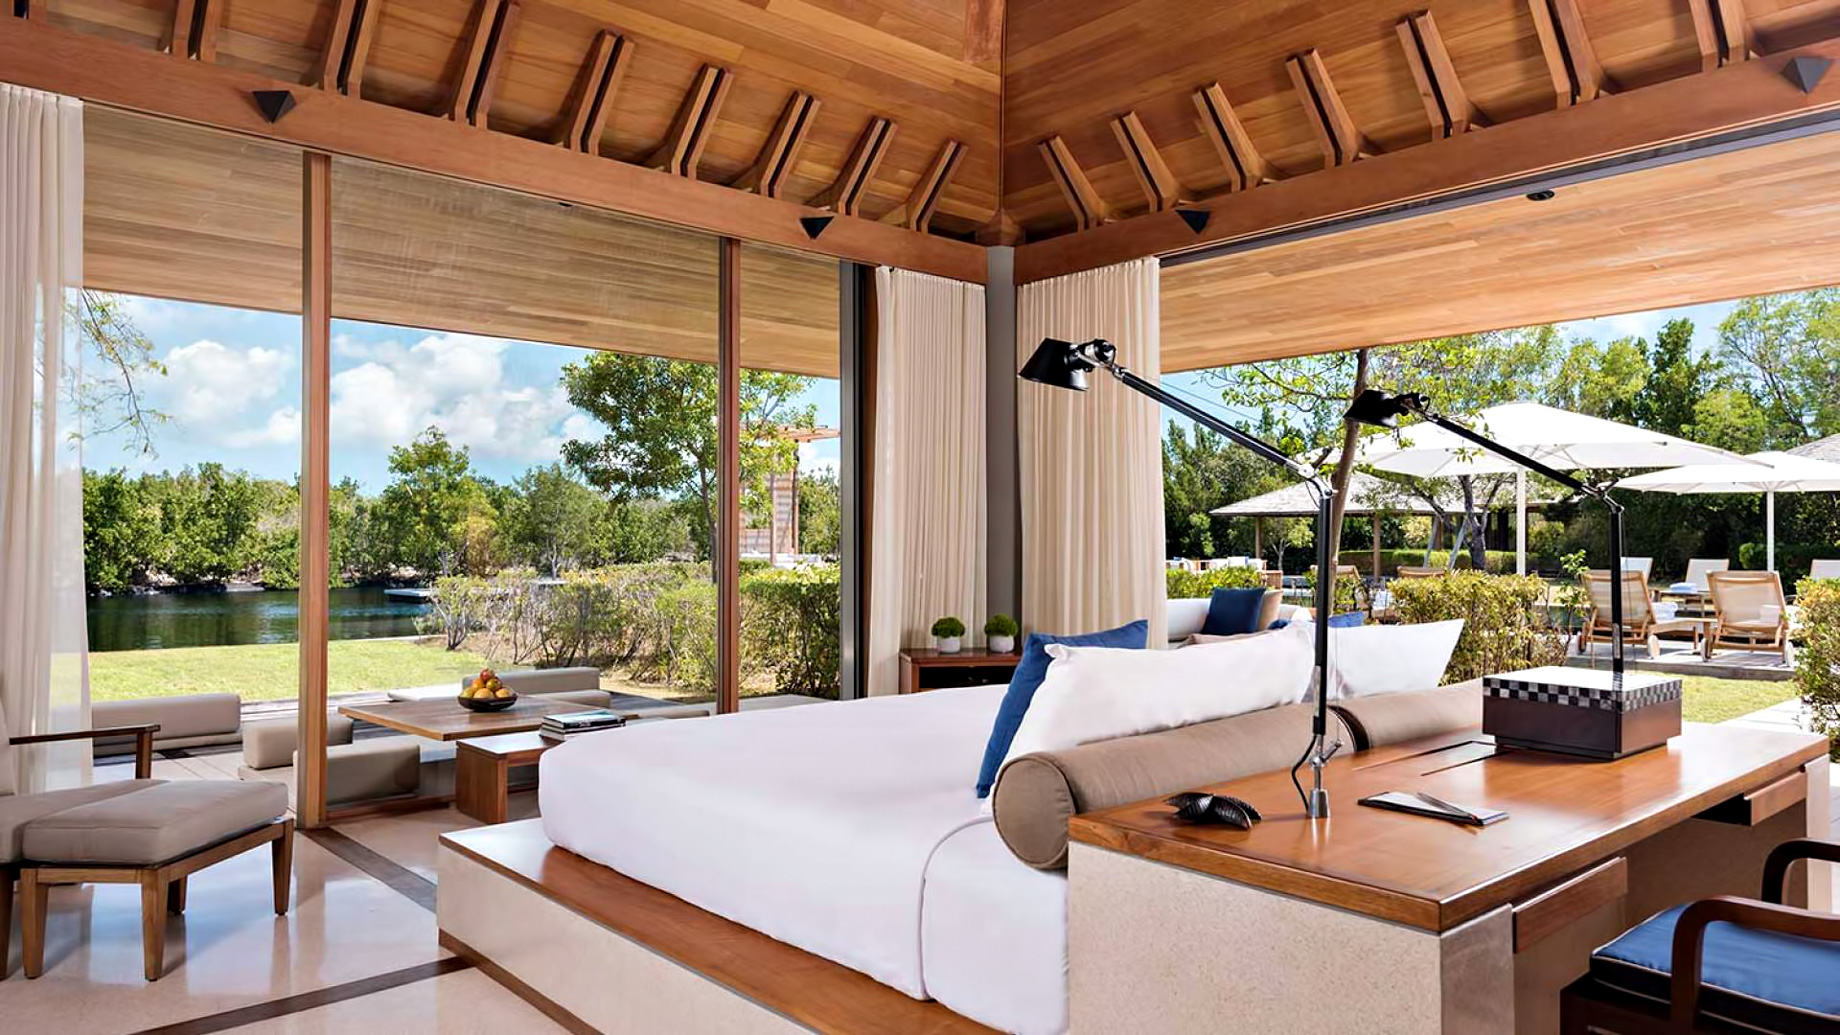 Amanyara Resort – Providenciales, Turks and Caicos Islands – 4 Bedroom Tranquility Villa Bedroom View